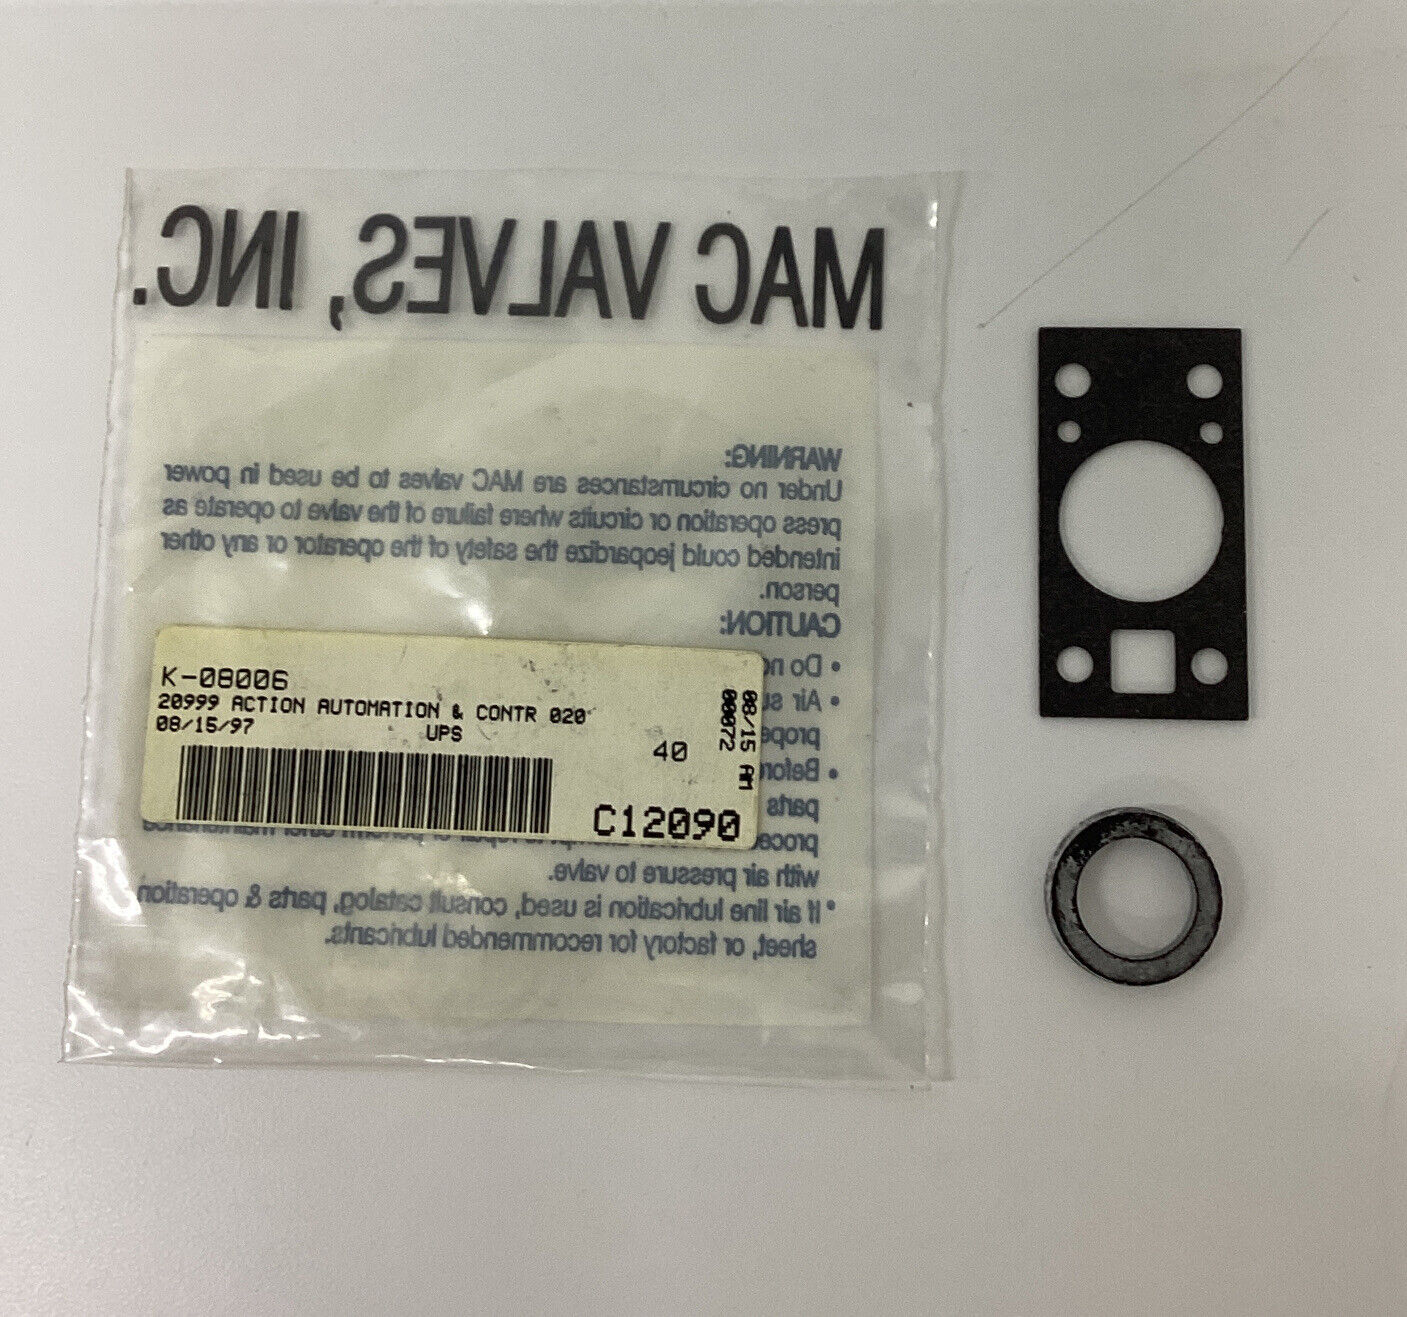 MAC Valves K-08006 Seal & Gasket Kit (CL288)